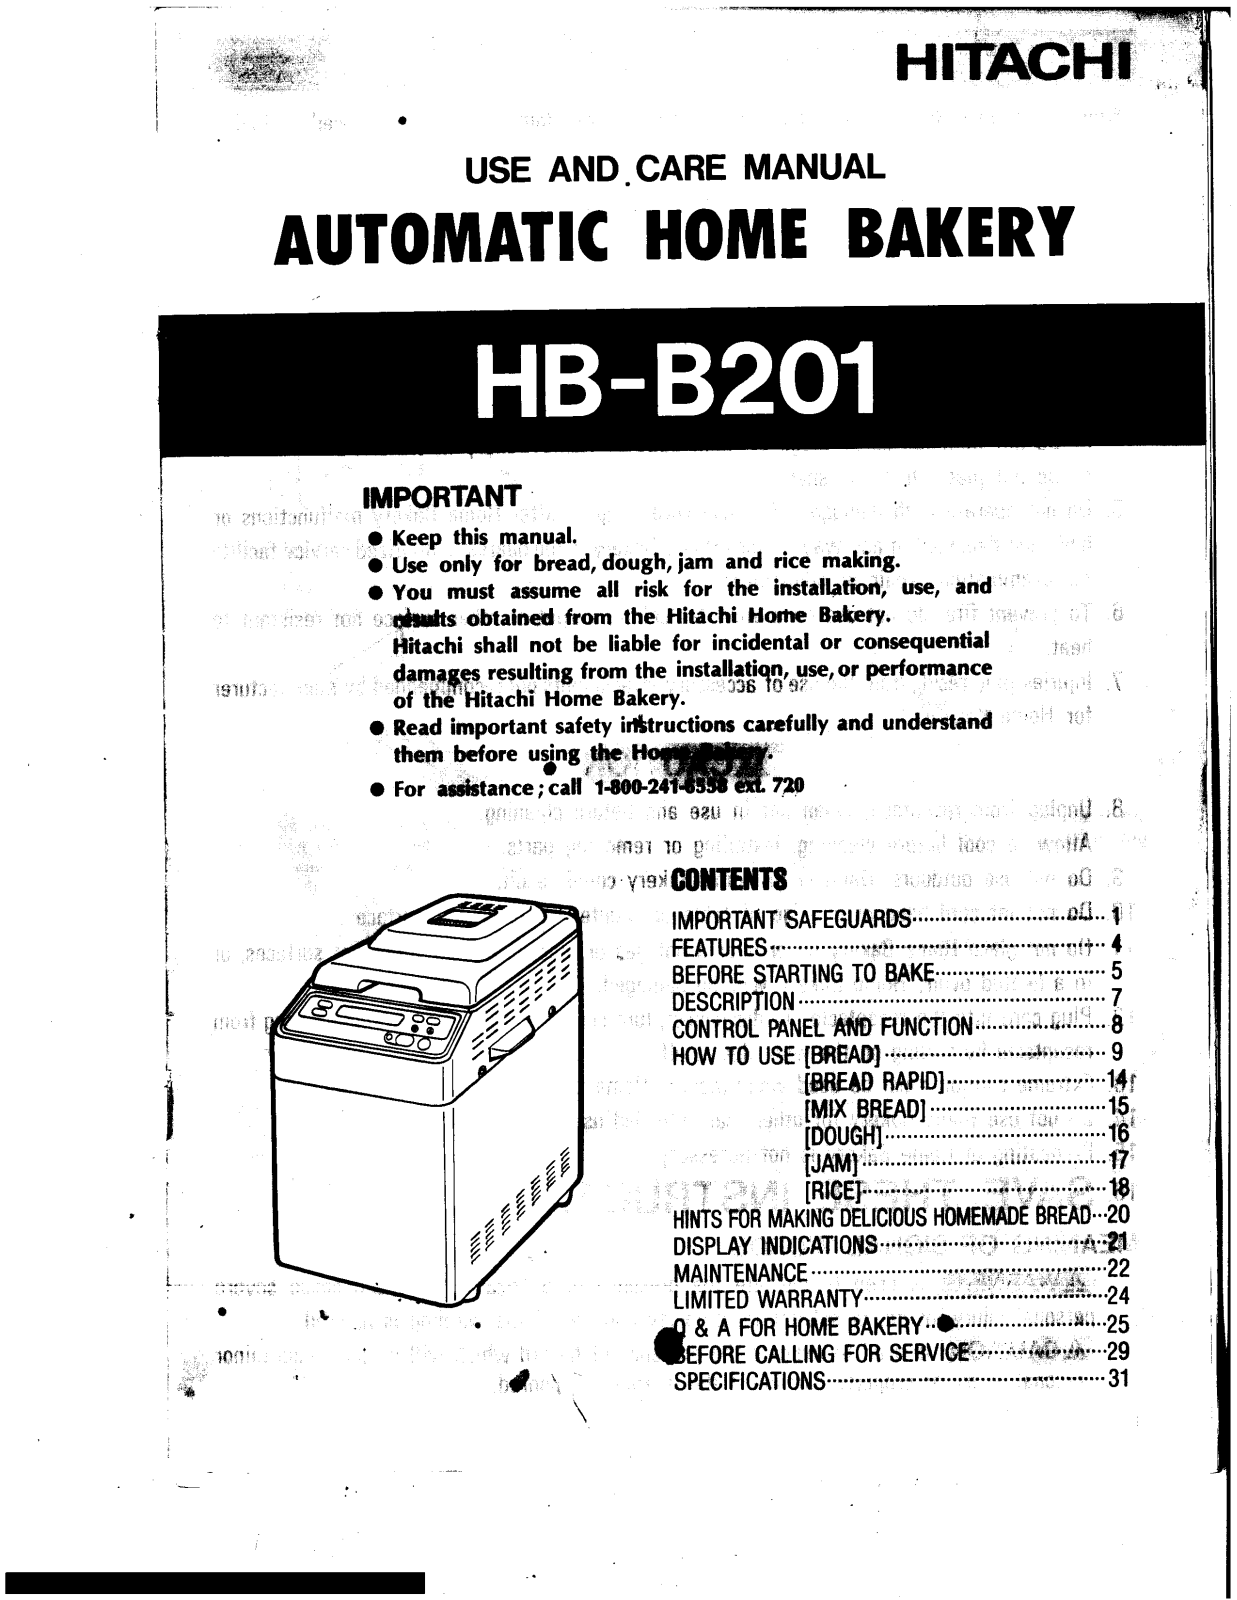 Hitachi HB-B201 User Manual